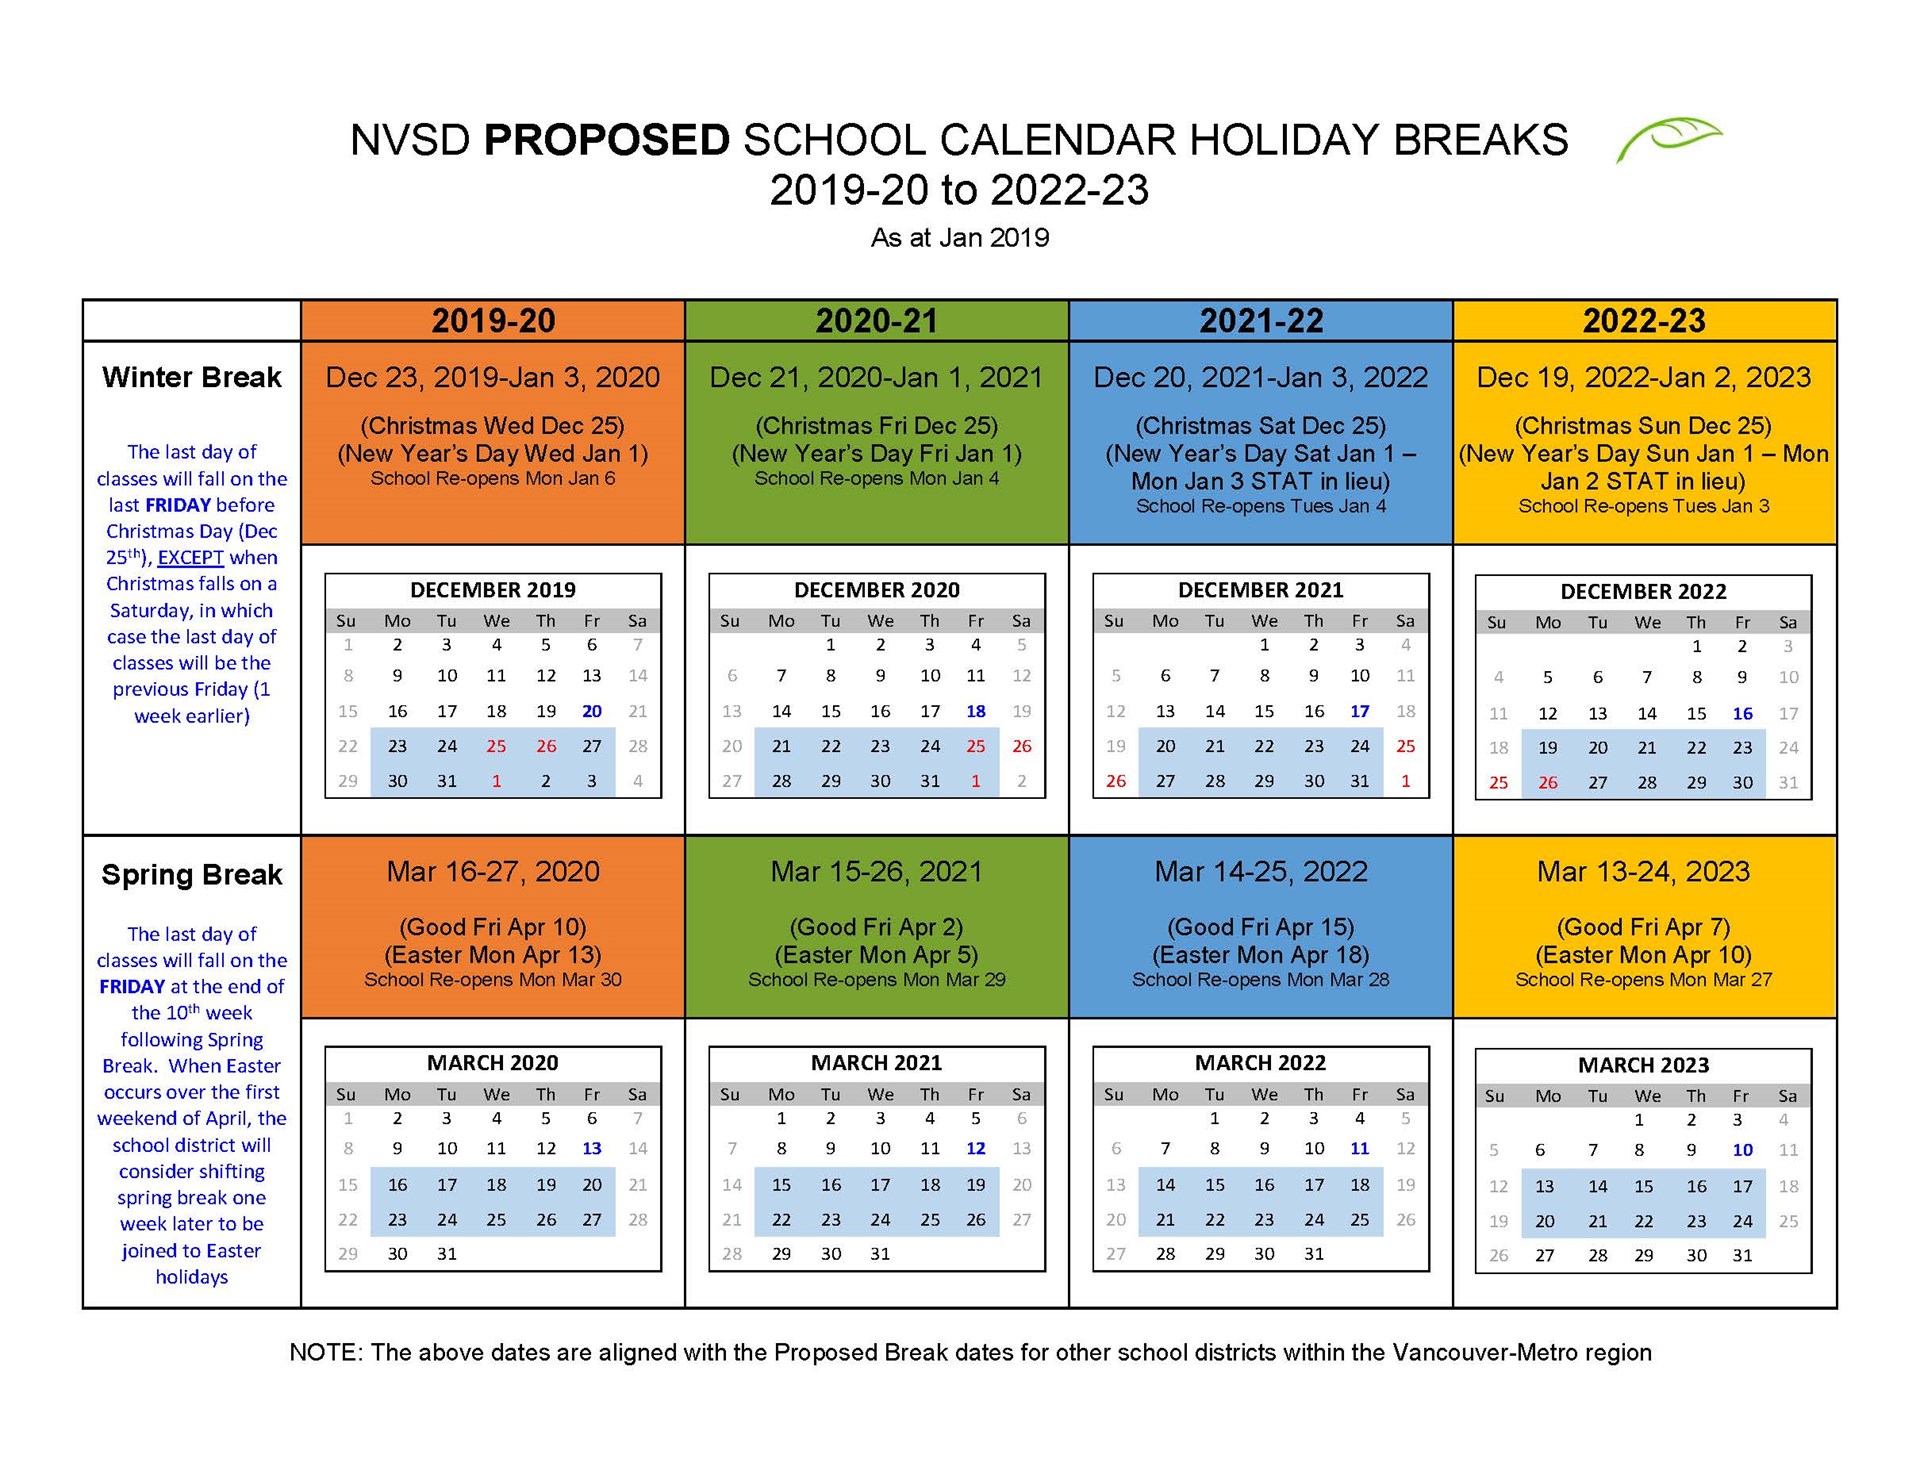 NVSD Break Schedule 2019 2023 